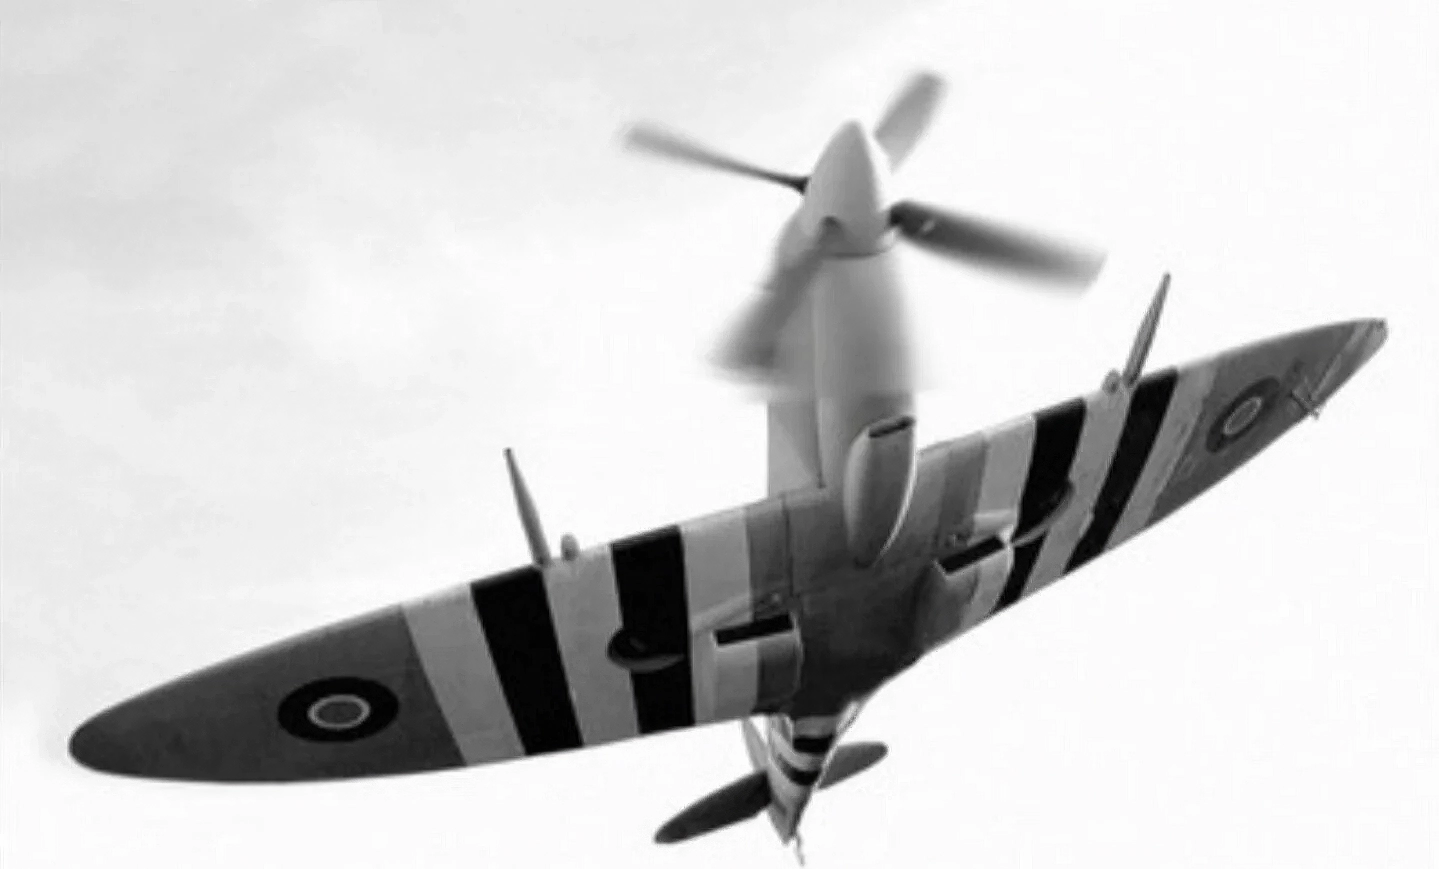 Spitfire Mk IX with invasion stripes in flight